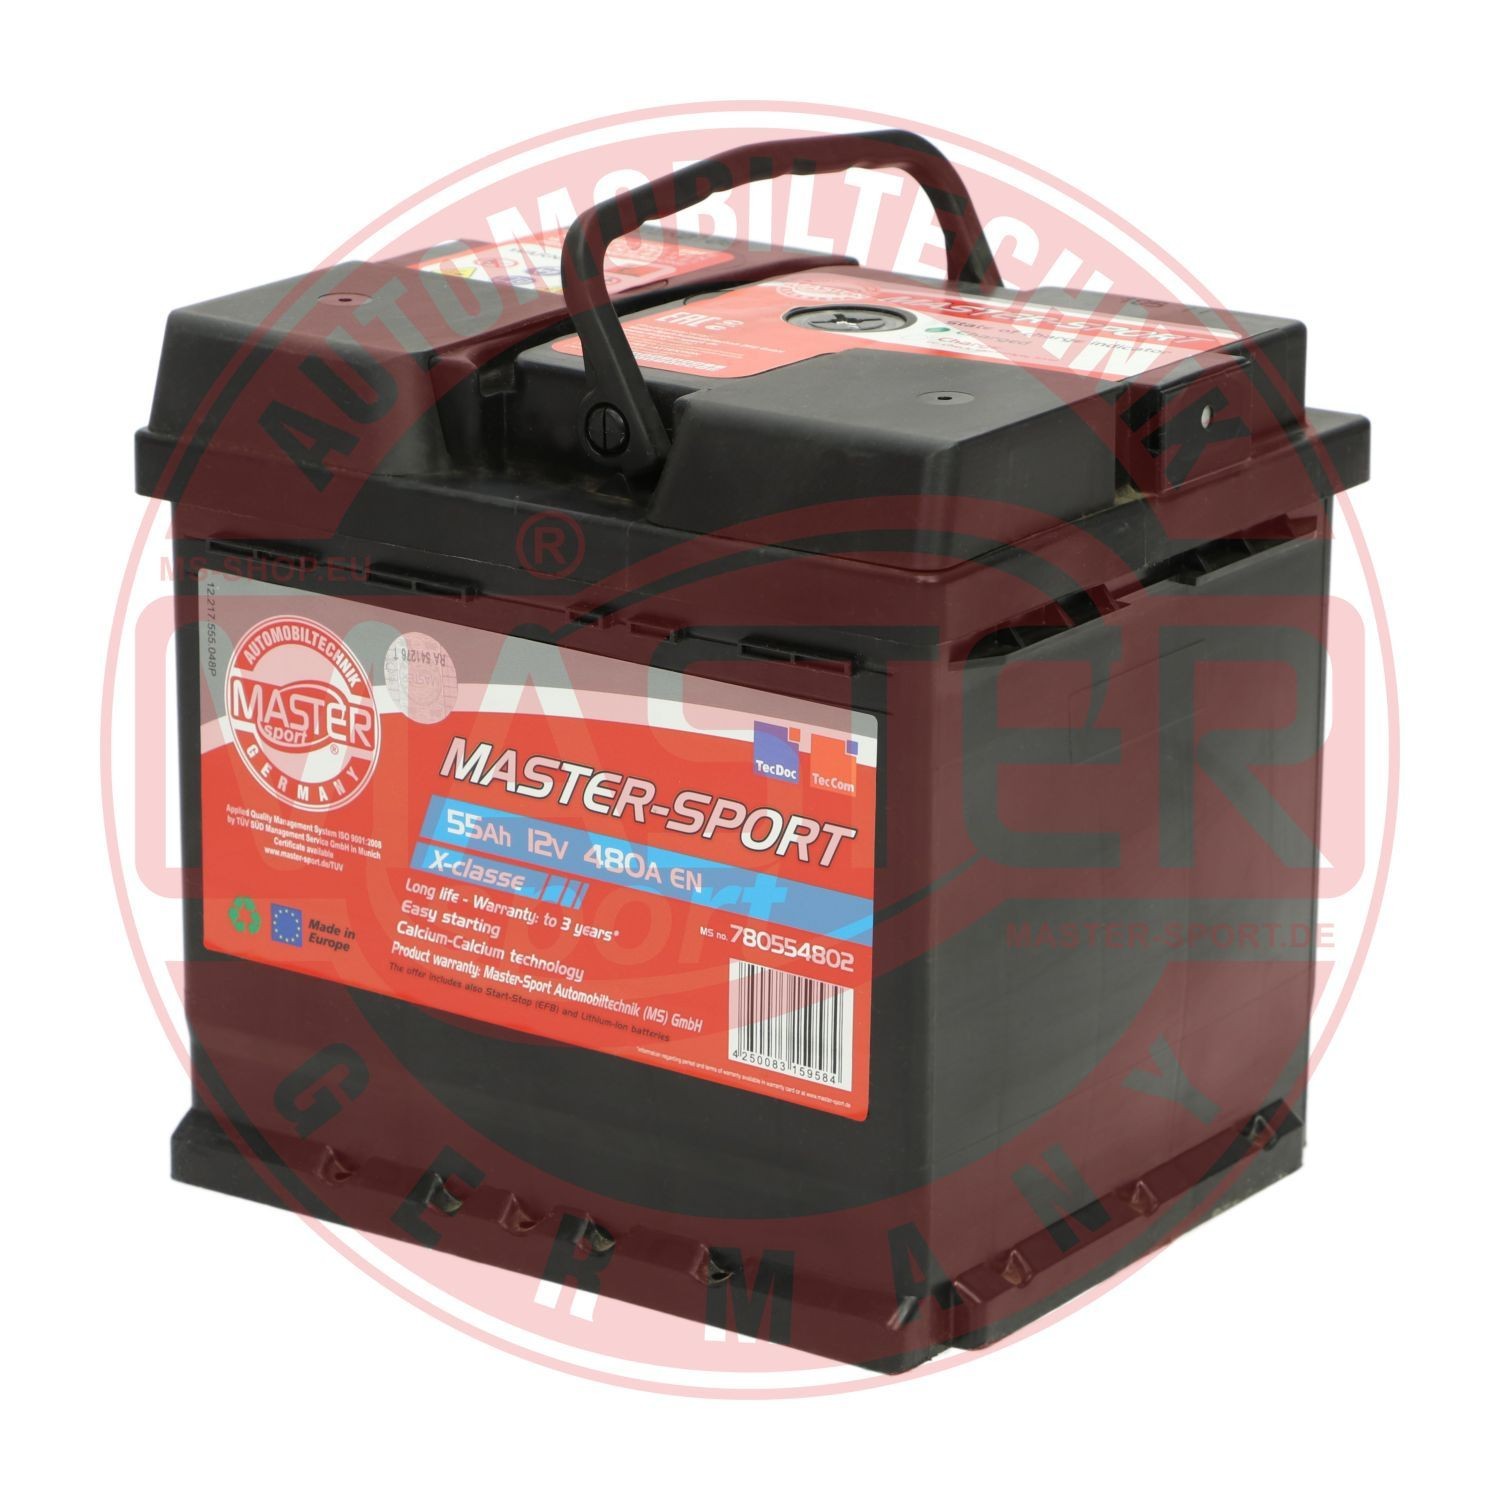 780554802 MASTER-SPORT Car battery DACIA 12V 55Ah 480A B13 L1 Lead-acid battery